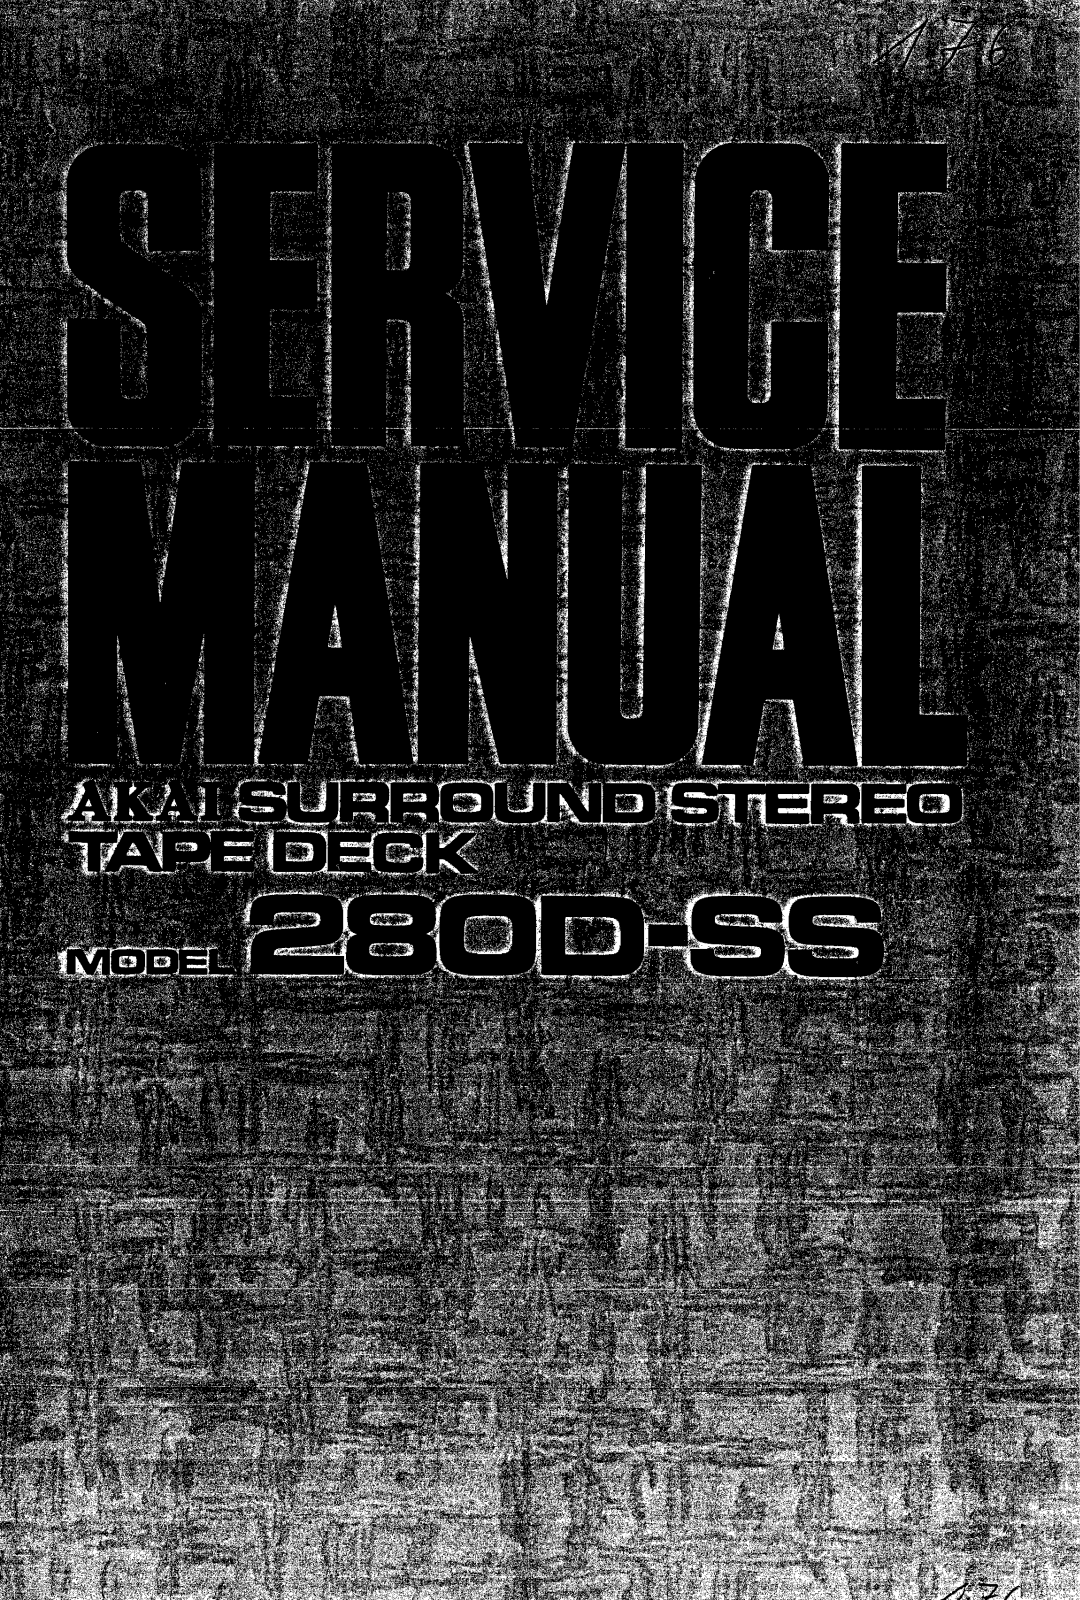 Akai 280-DSS Service Manual